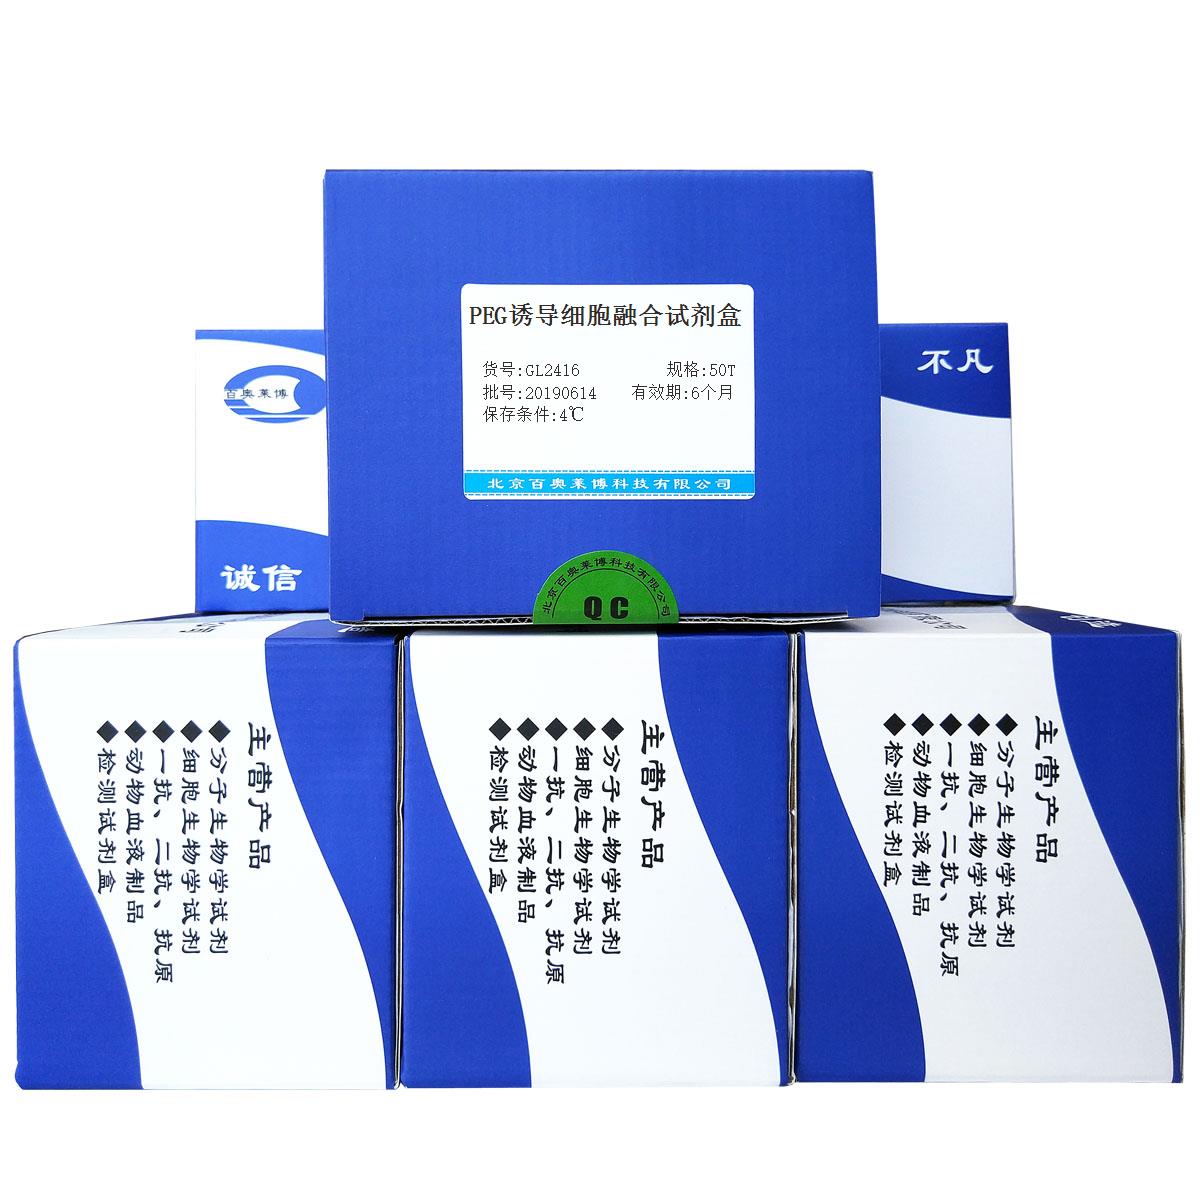 PEG诱导细胞融合试剂盒北京品牌